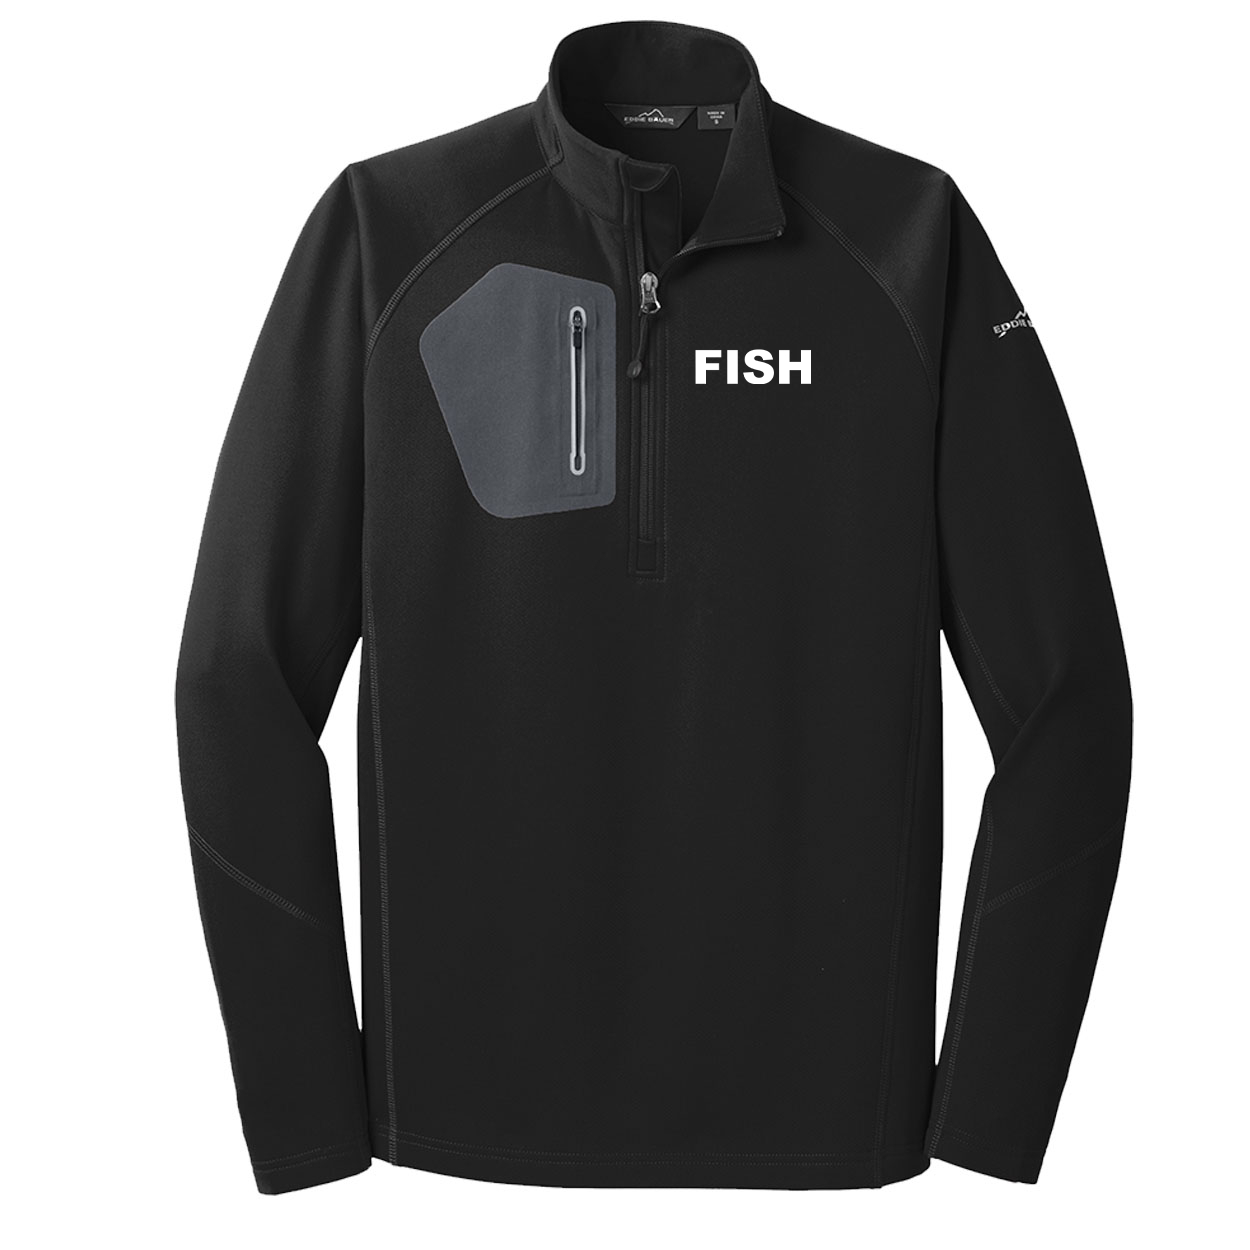 Fish Brand Logo Night Out Quarter Zip Performance Fleece Black (White Logo)